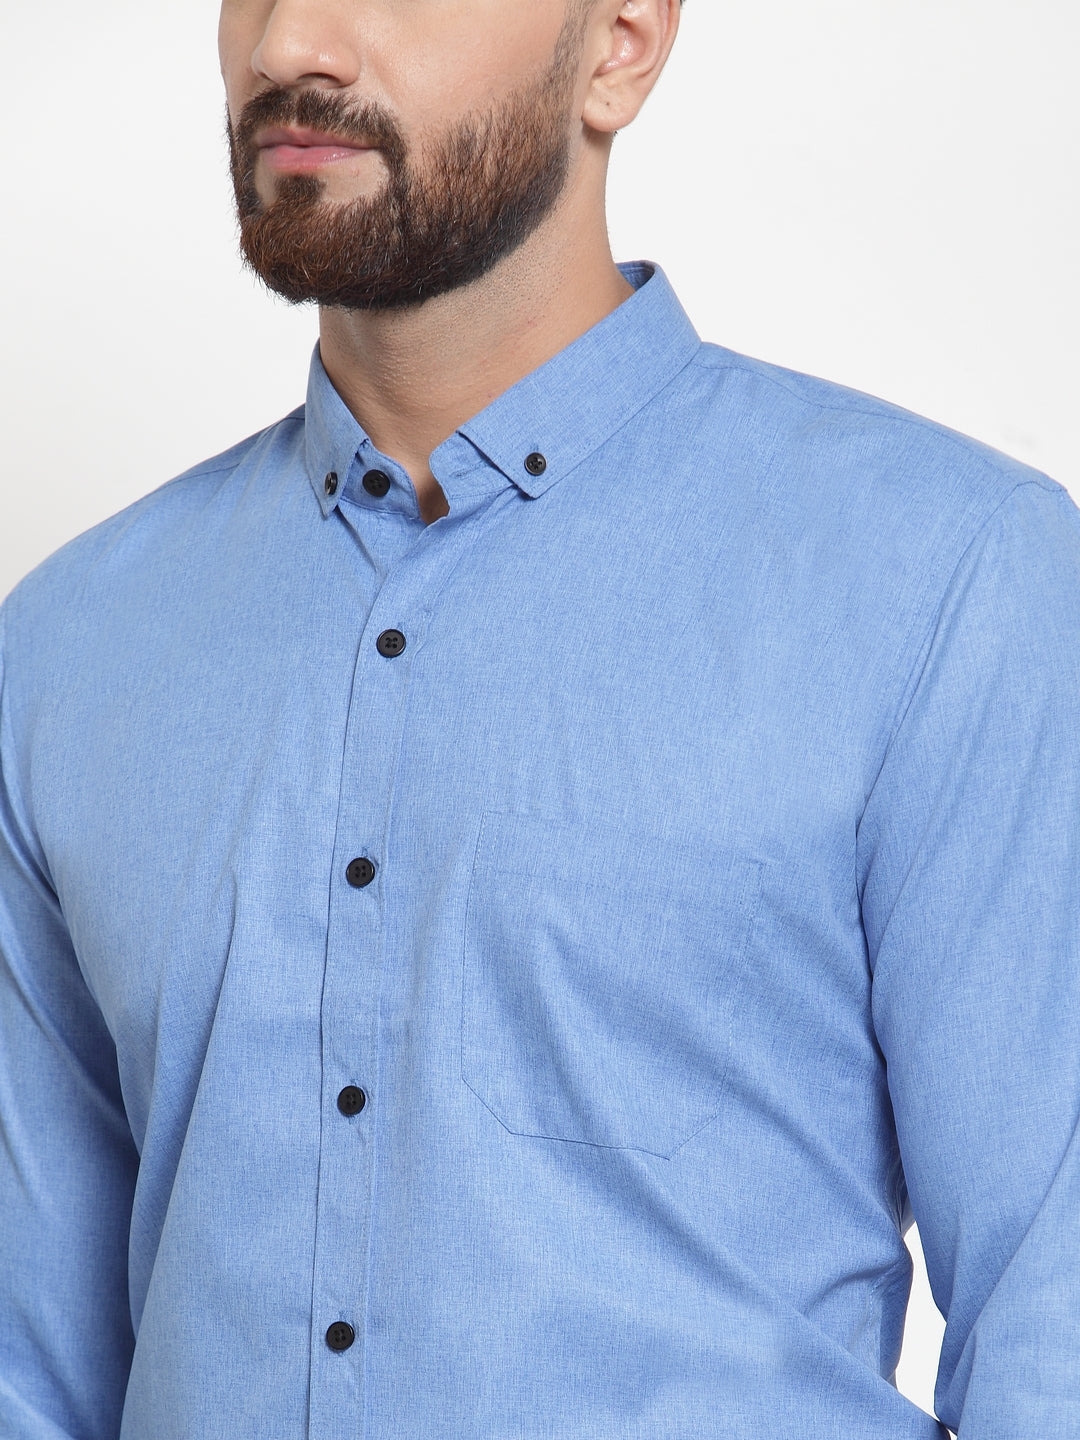 Men's Blue Cotton Solid Button Down Formal Shirts ( SF 734Light-Blue ) - Jainish